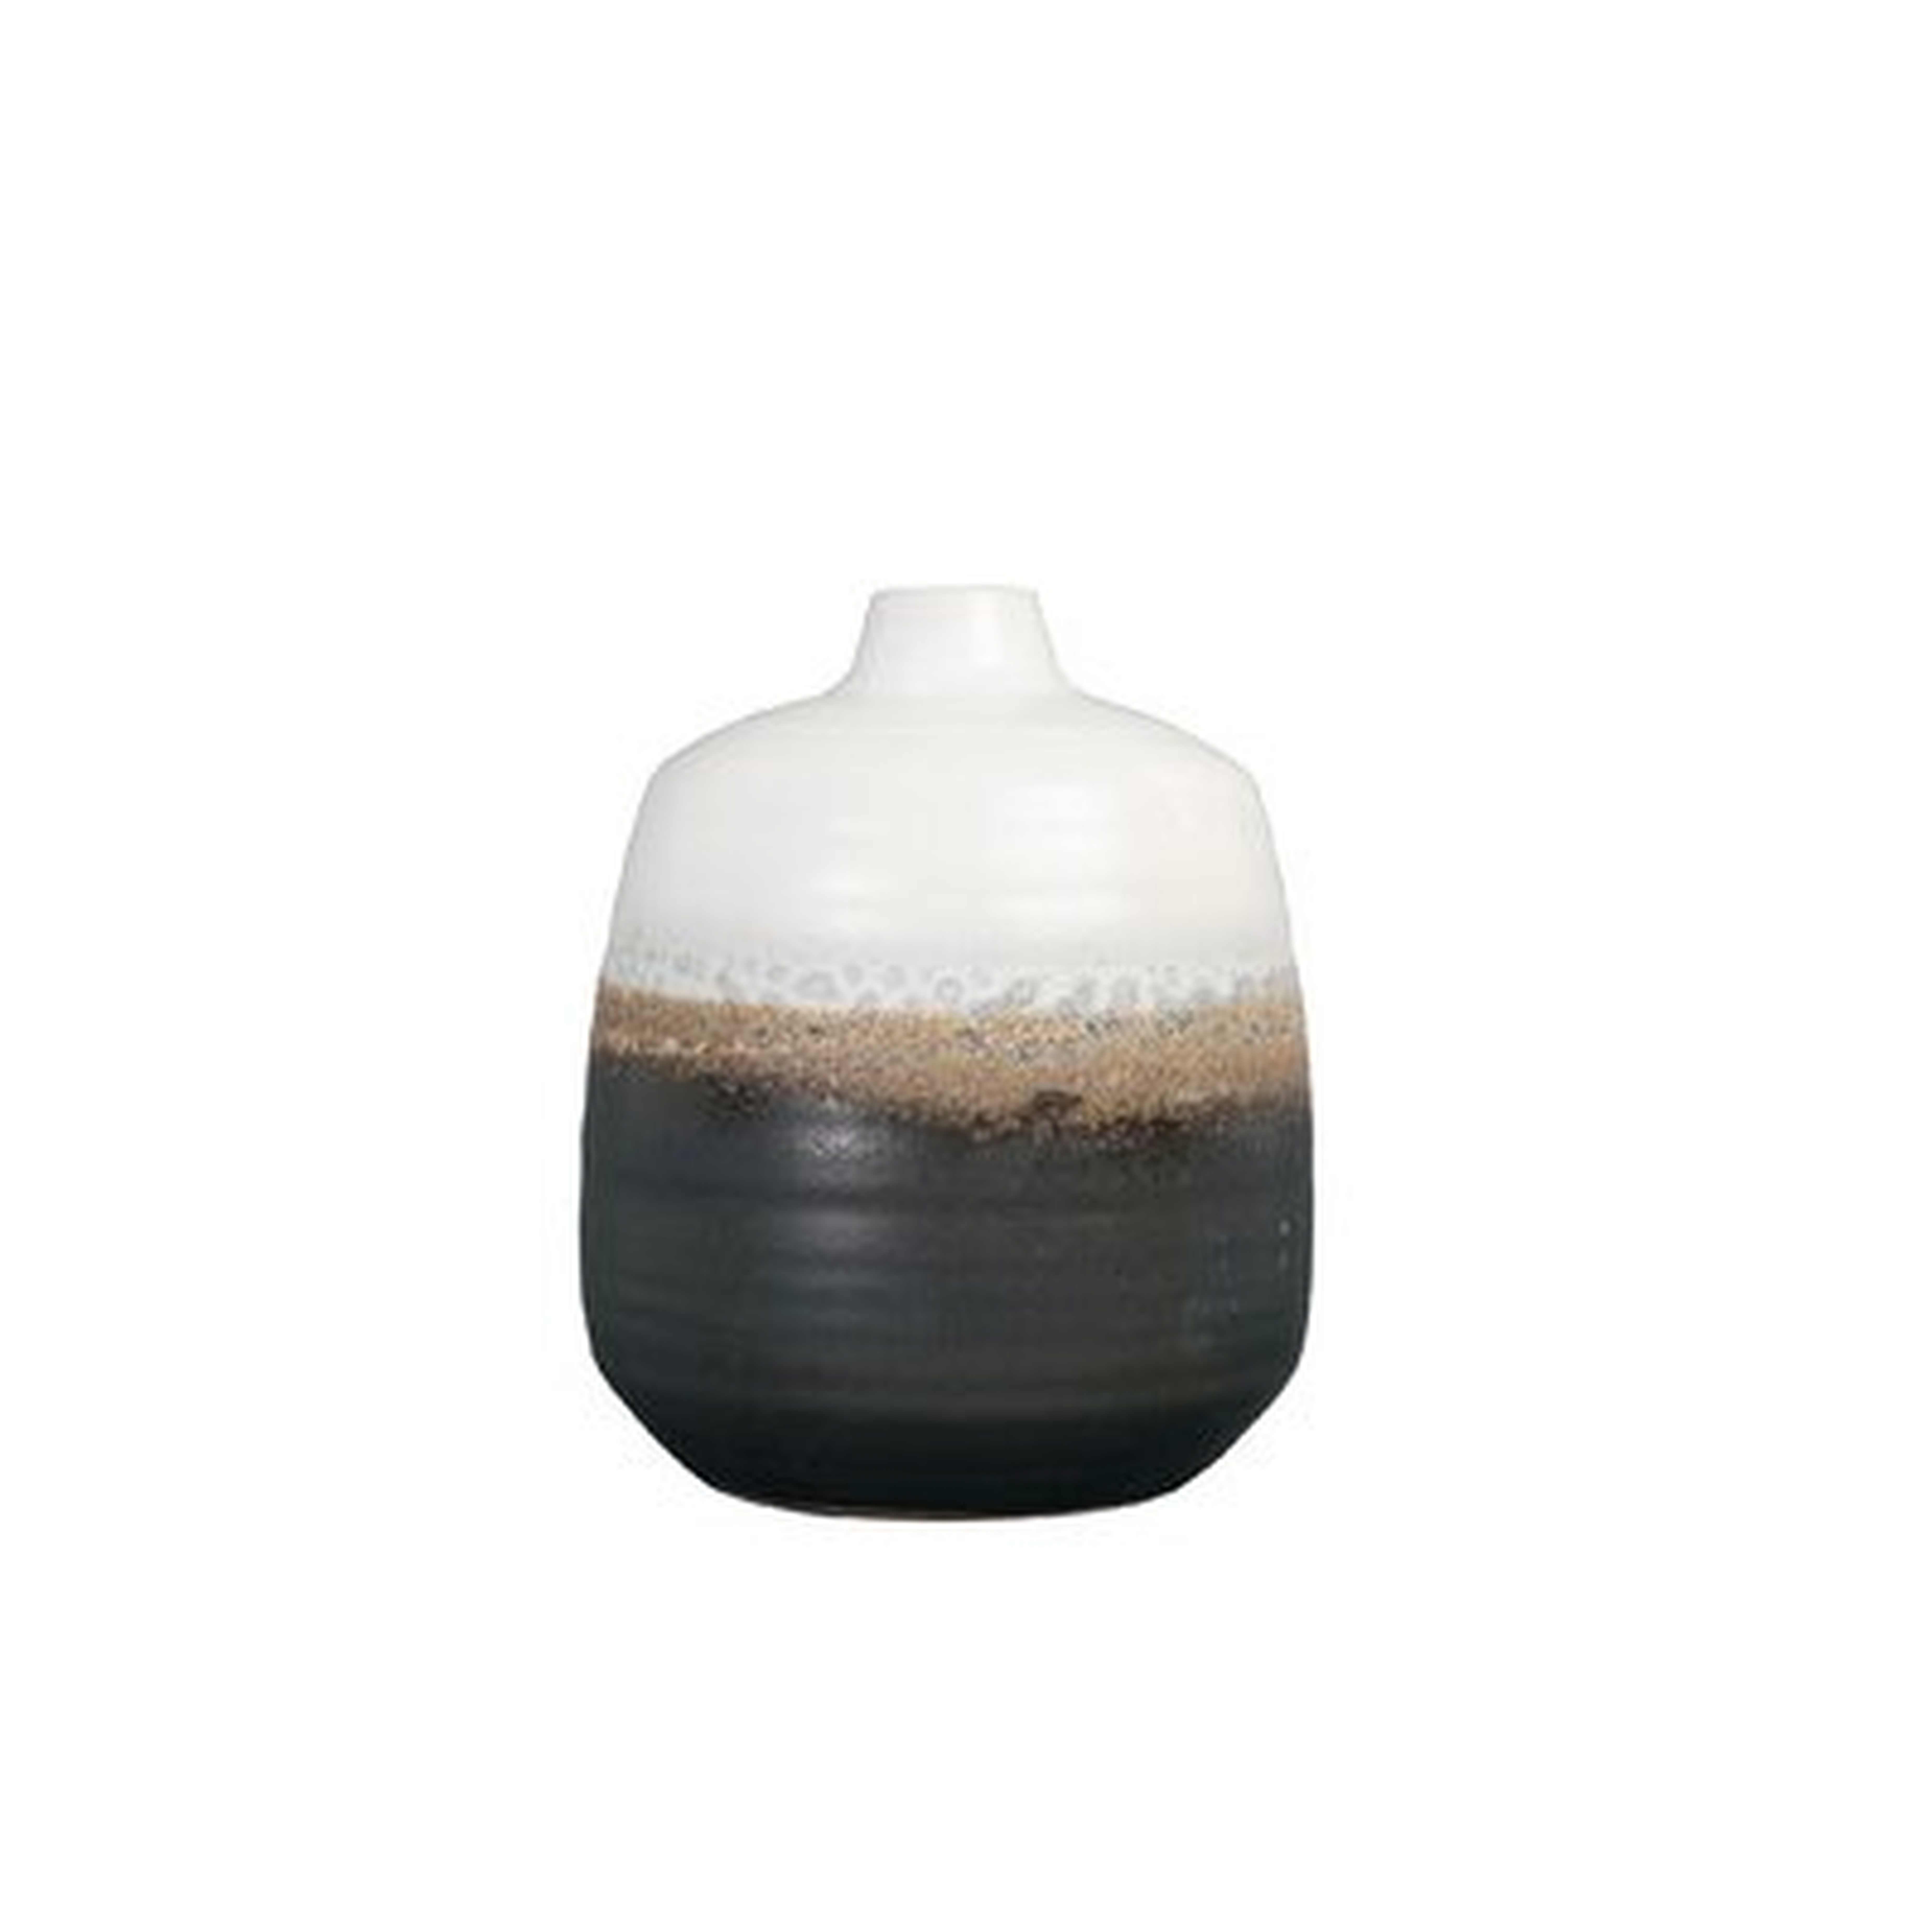 Lorelai Ceramic Table Vase - Wayfair